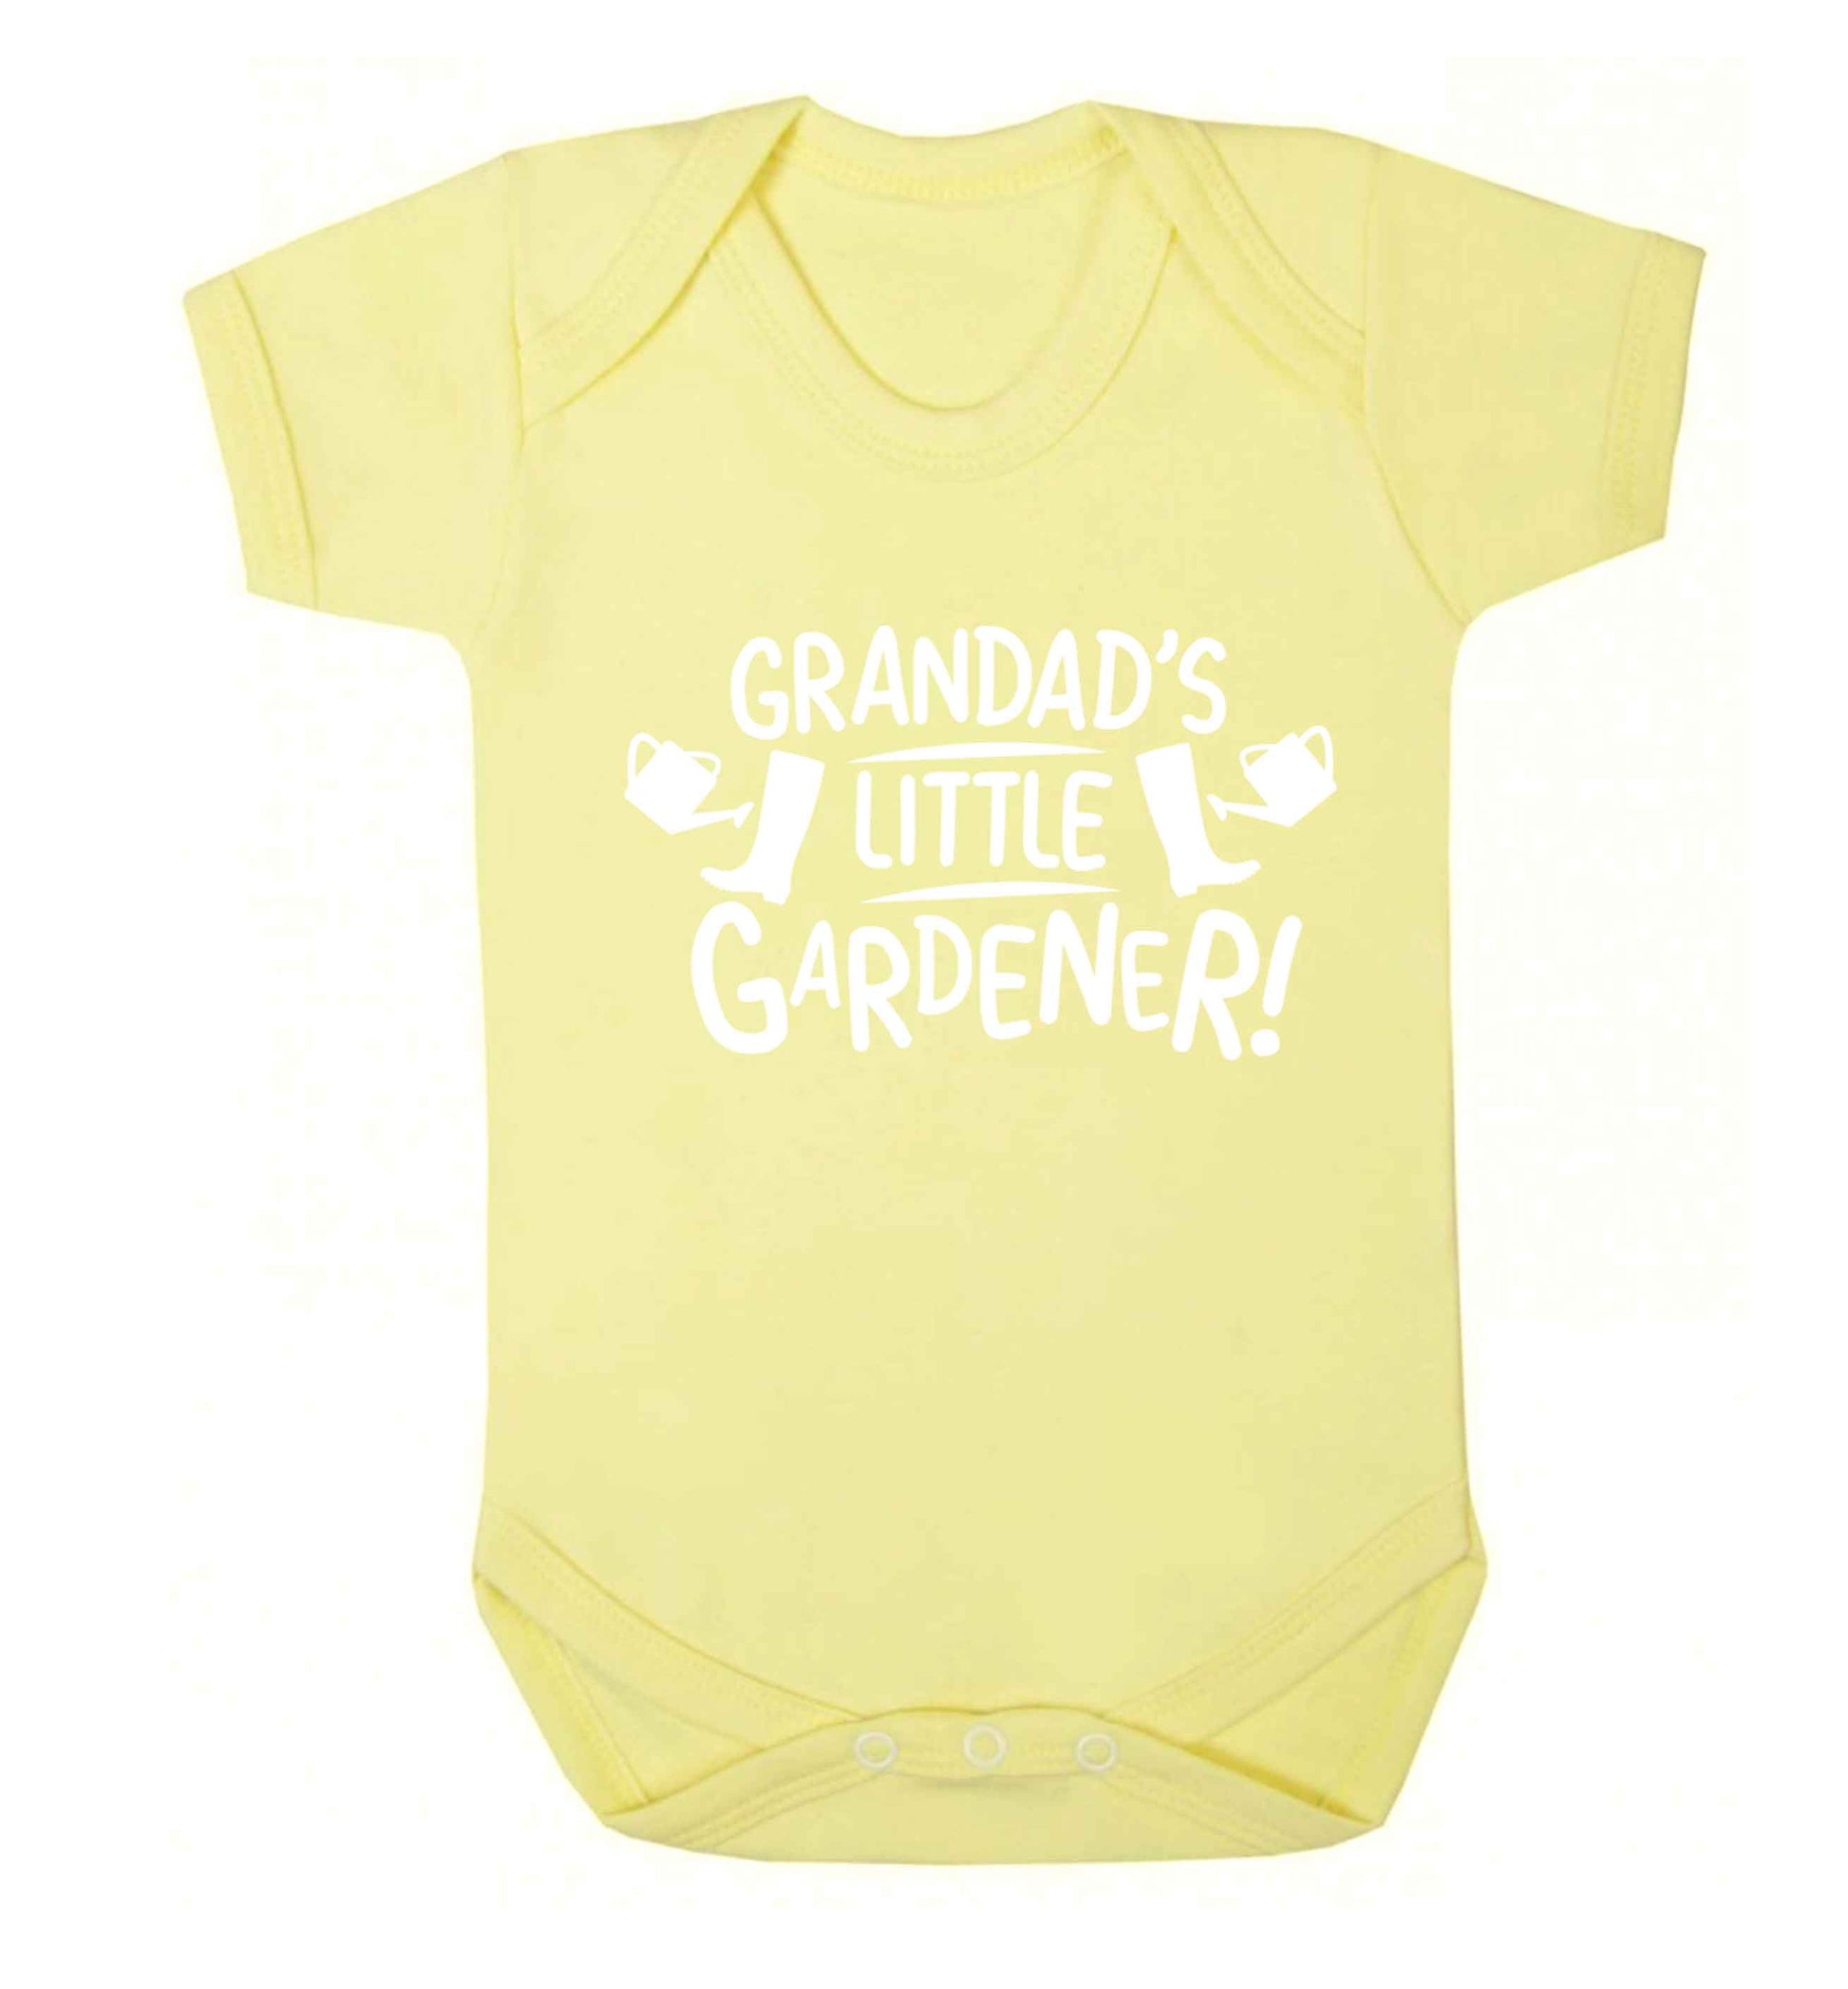 Grandad's little gardener Baby Vest pale yellow 18-24 months